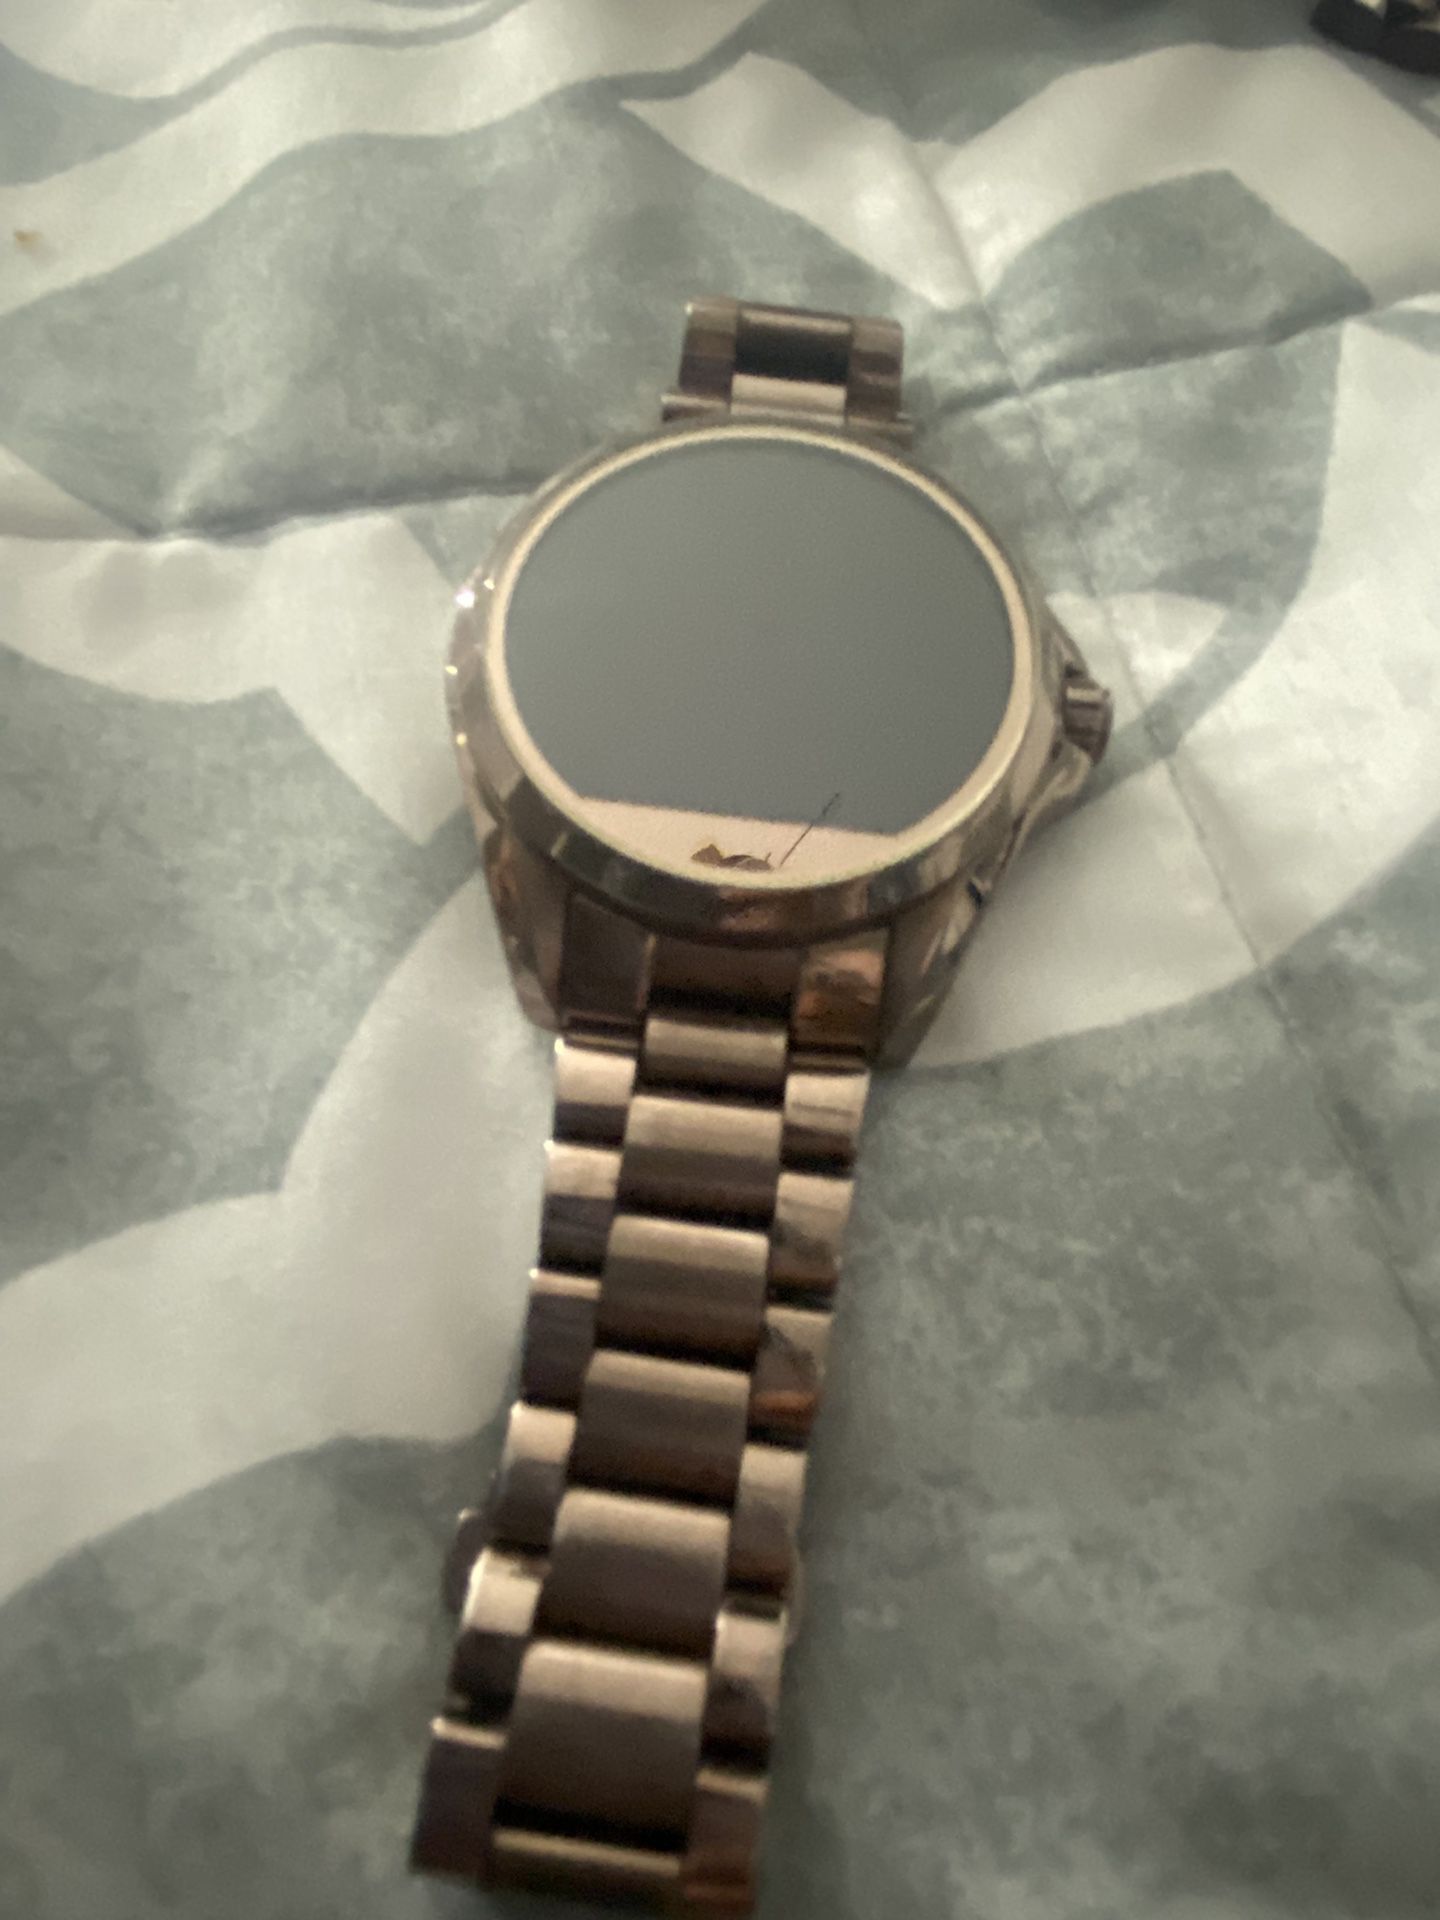 MK Smart watch